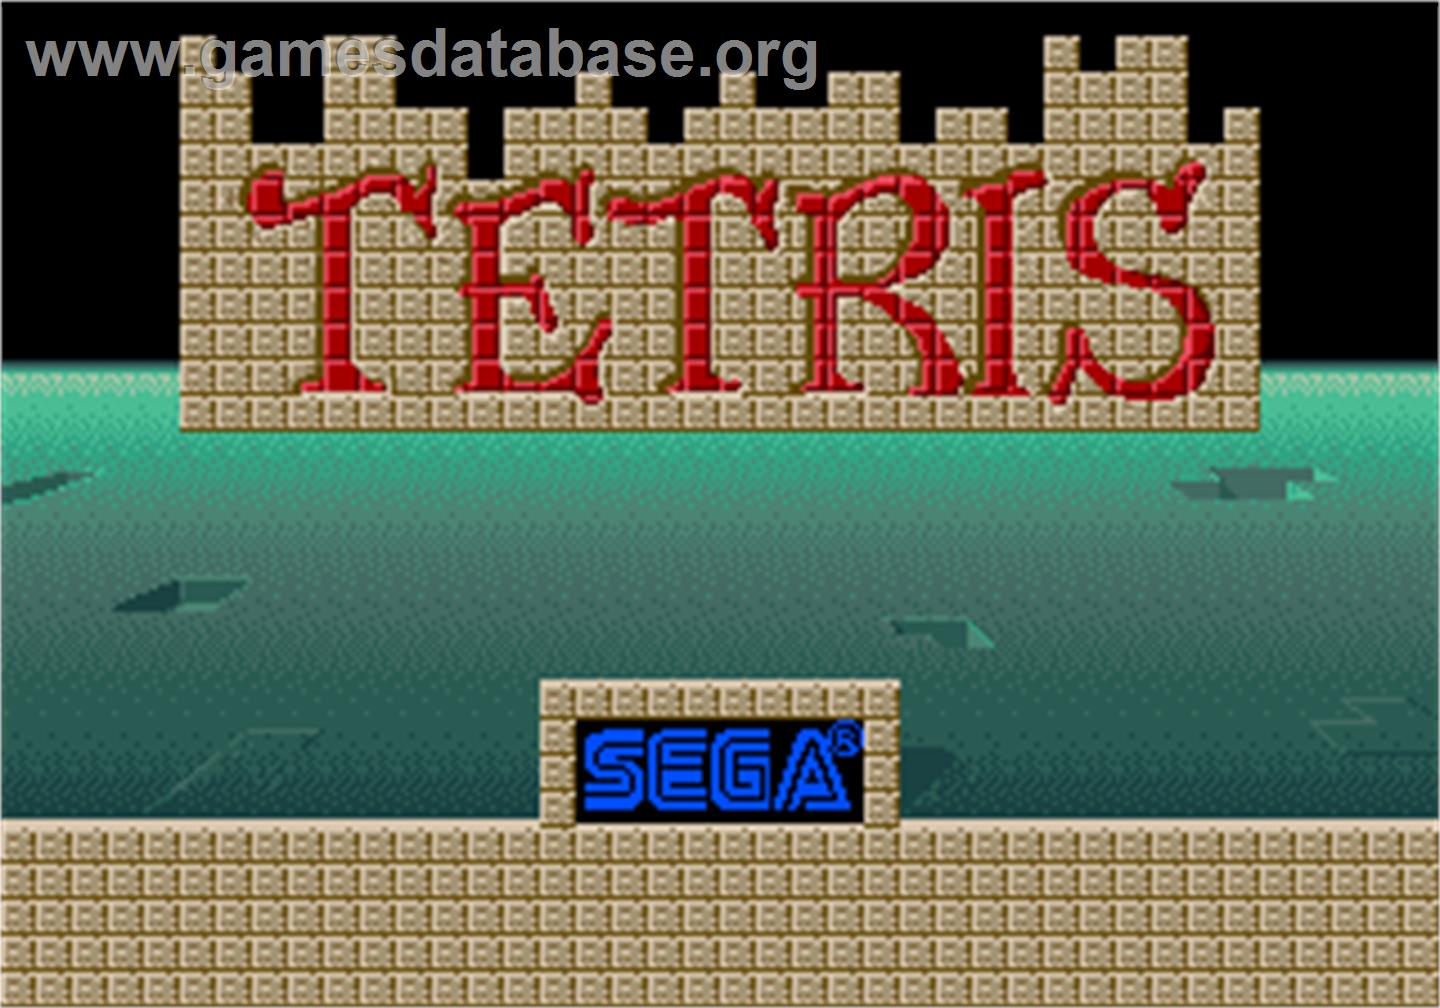 Tetris - Arcade - Artwork - Title Screen